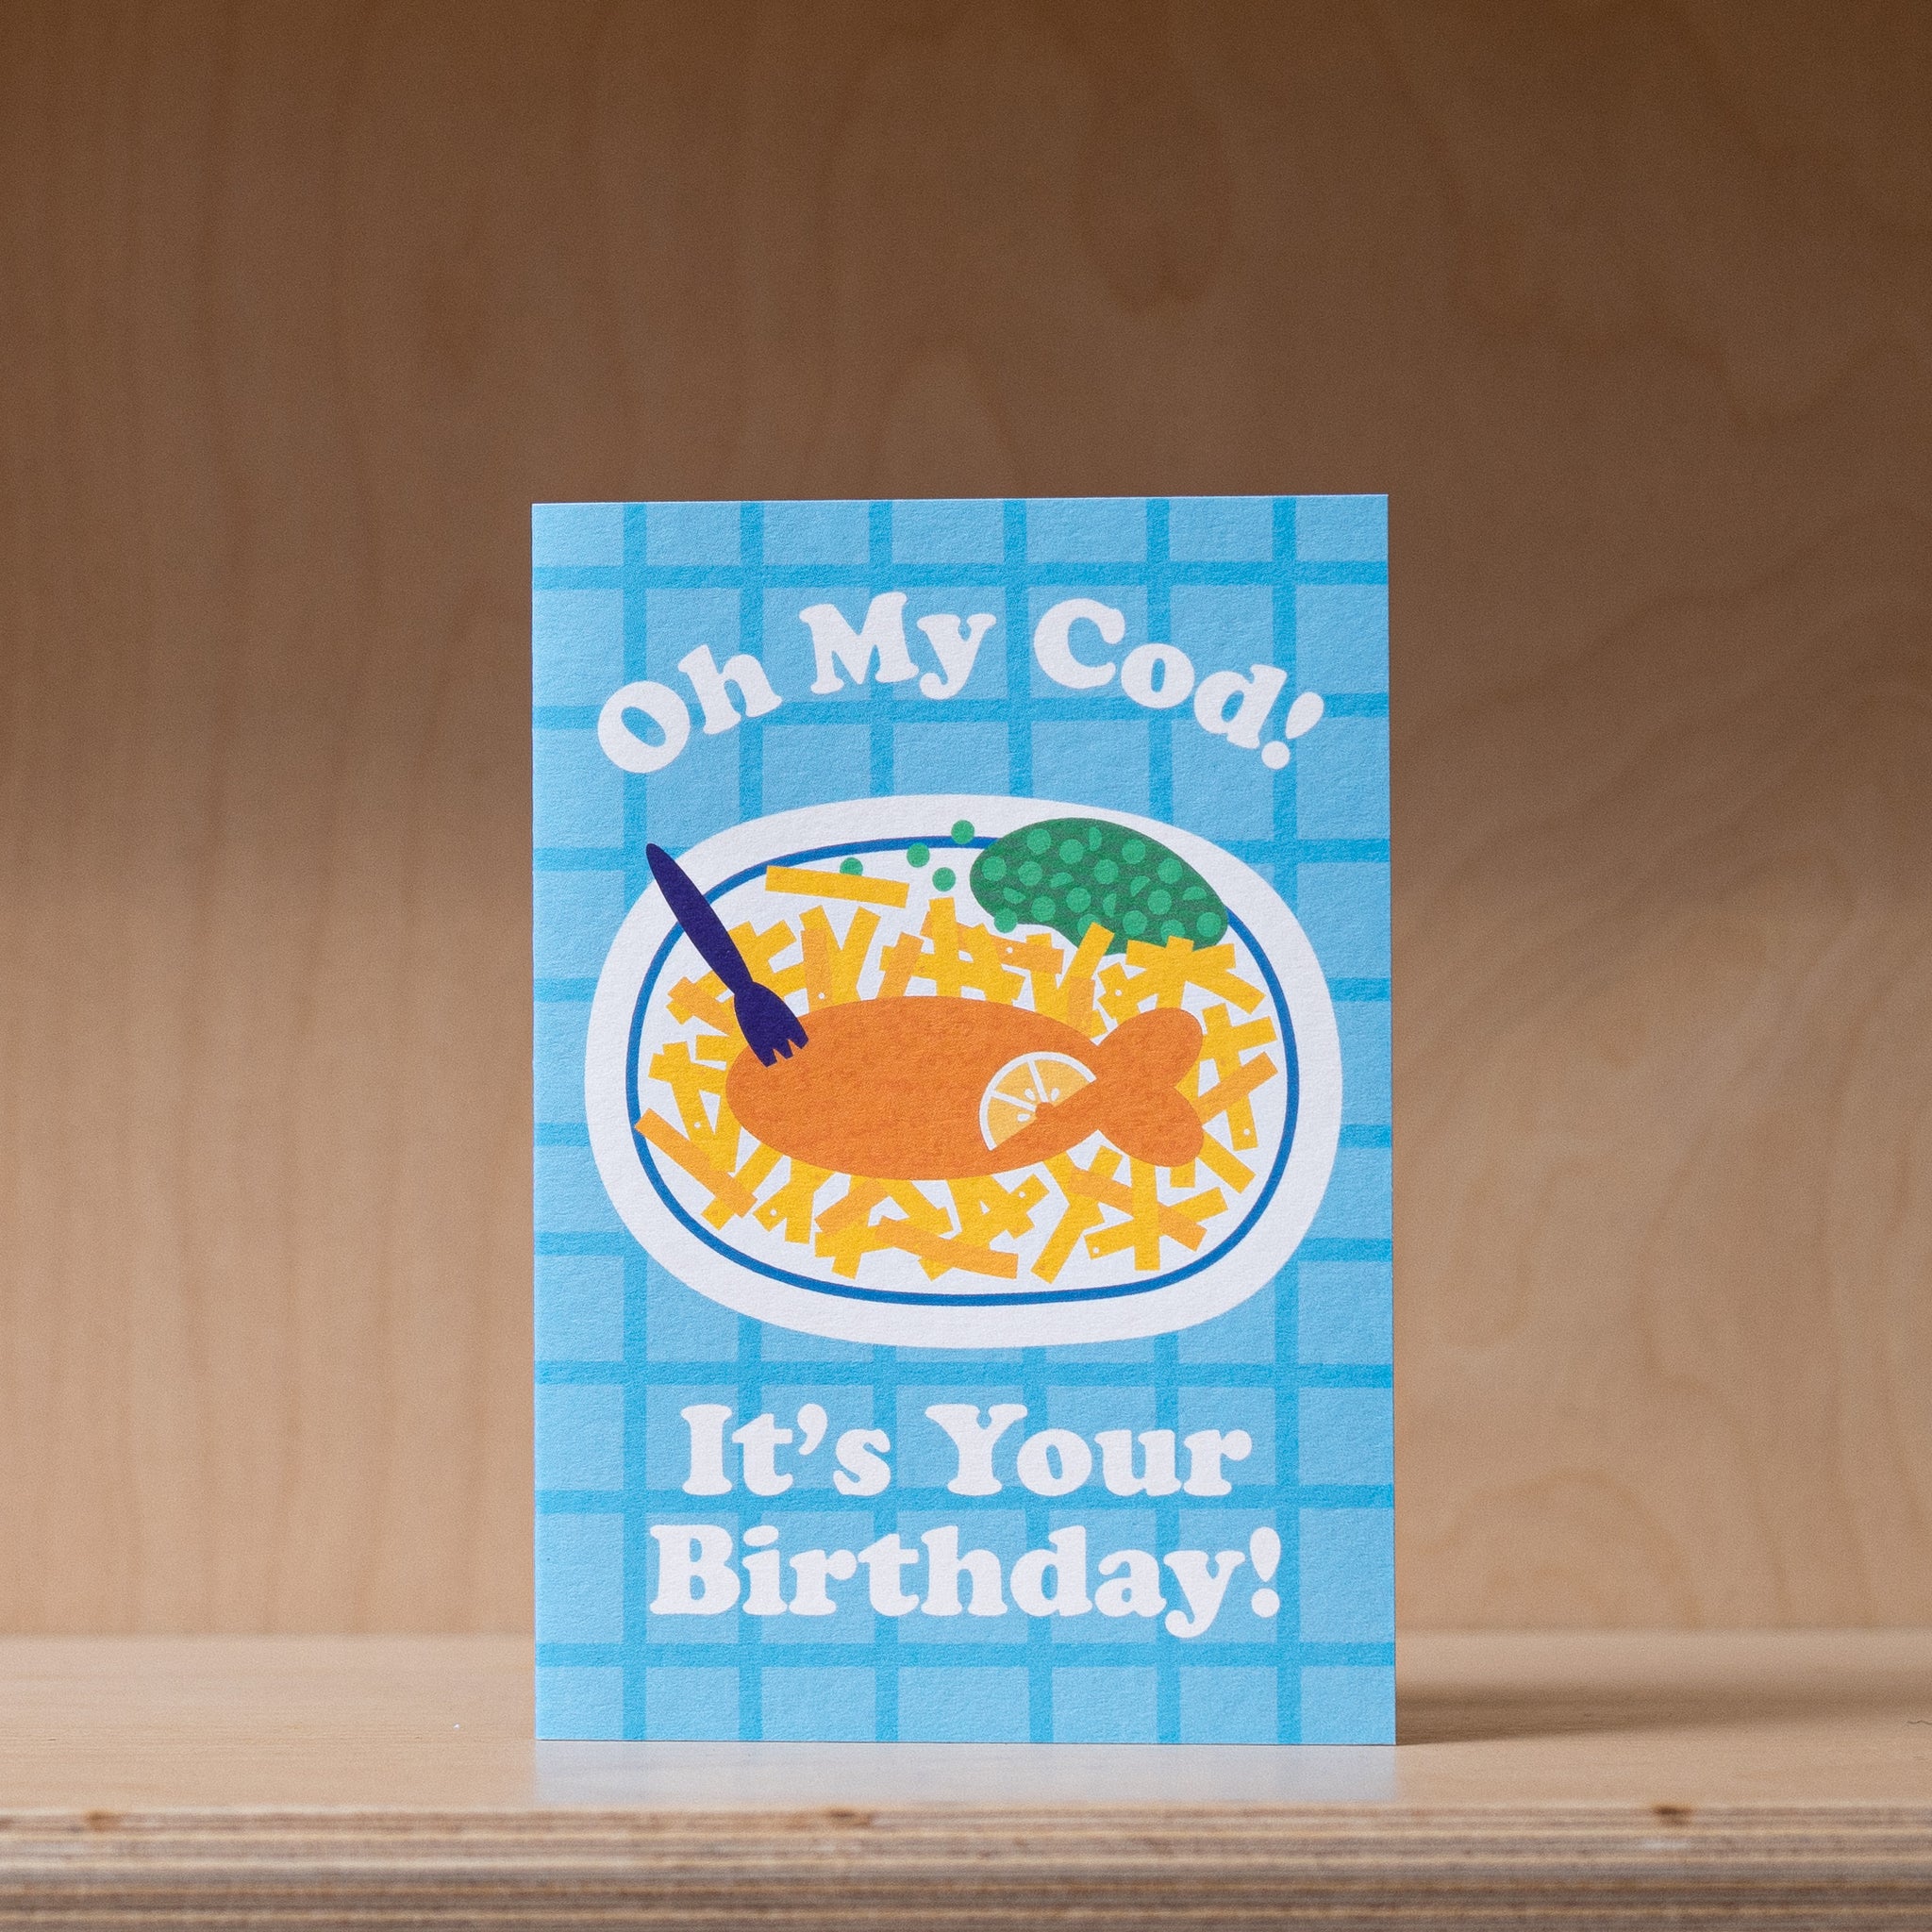 Studio Boketto - Greetings Card - Oh My Cod